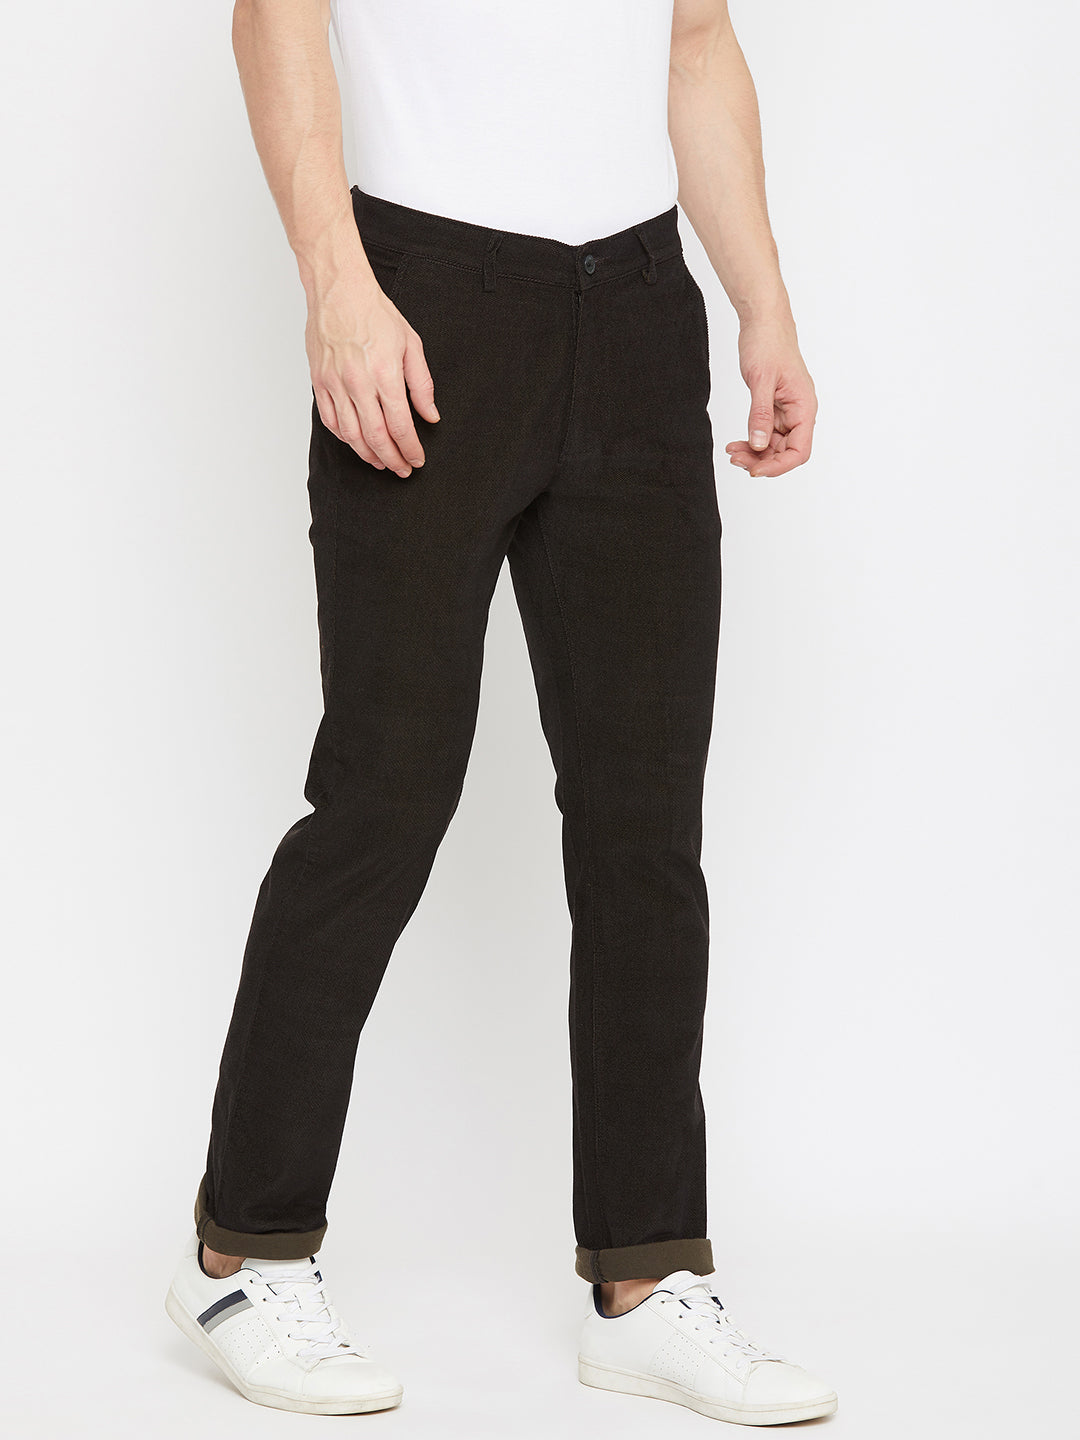 Black Slim Fit Trousers - Men Trousers